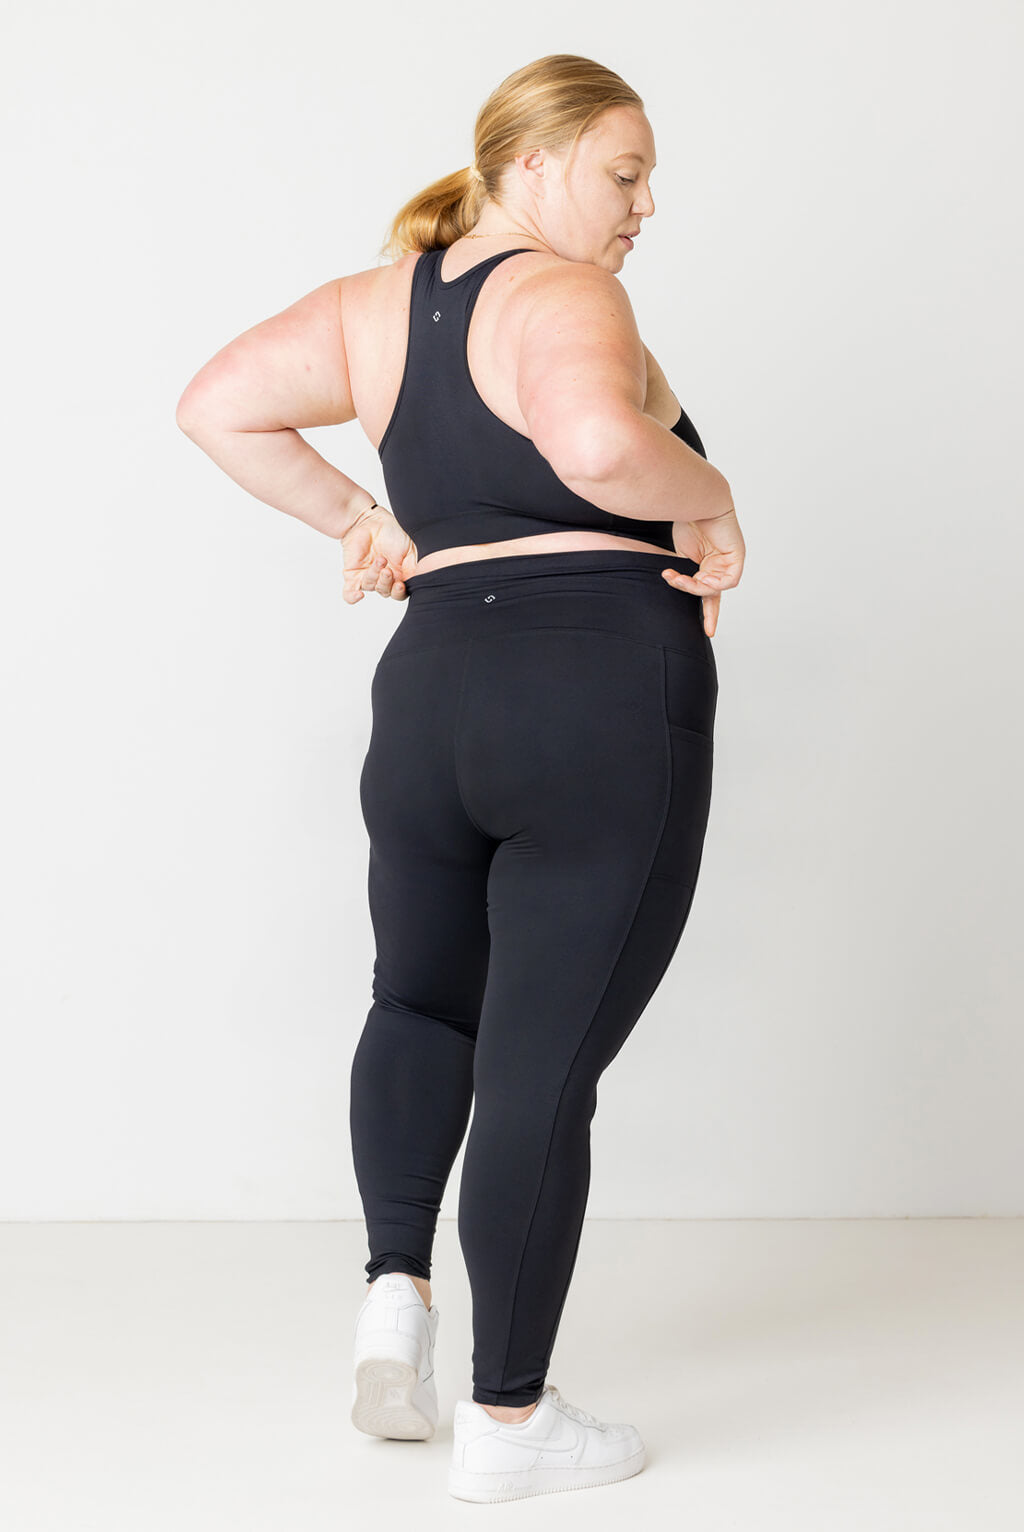  Yoga Pants Plus Size For Women Tall Workout Leggings